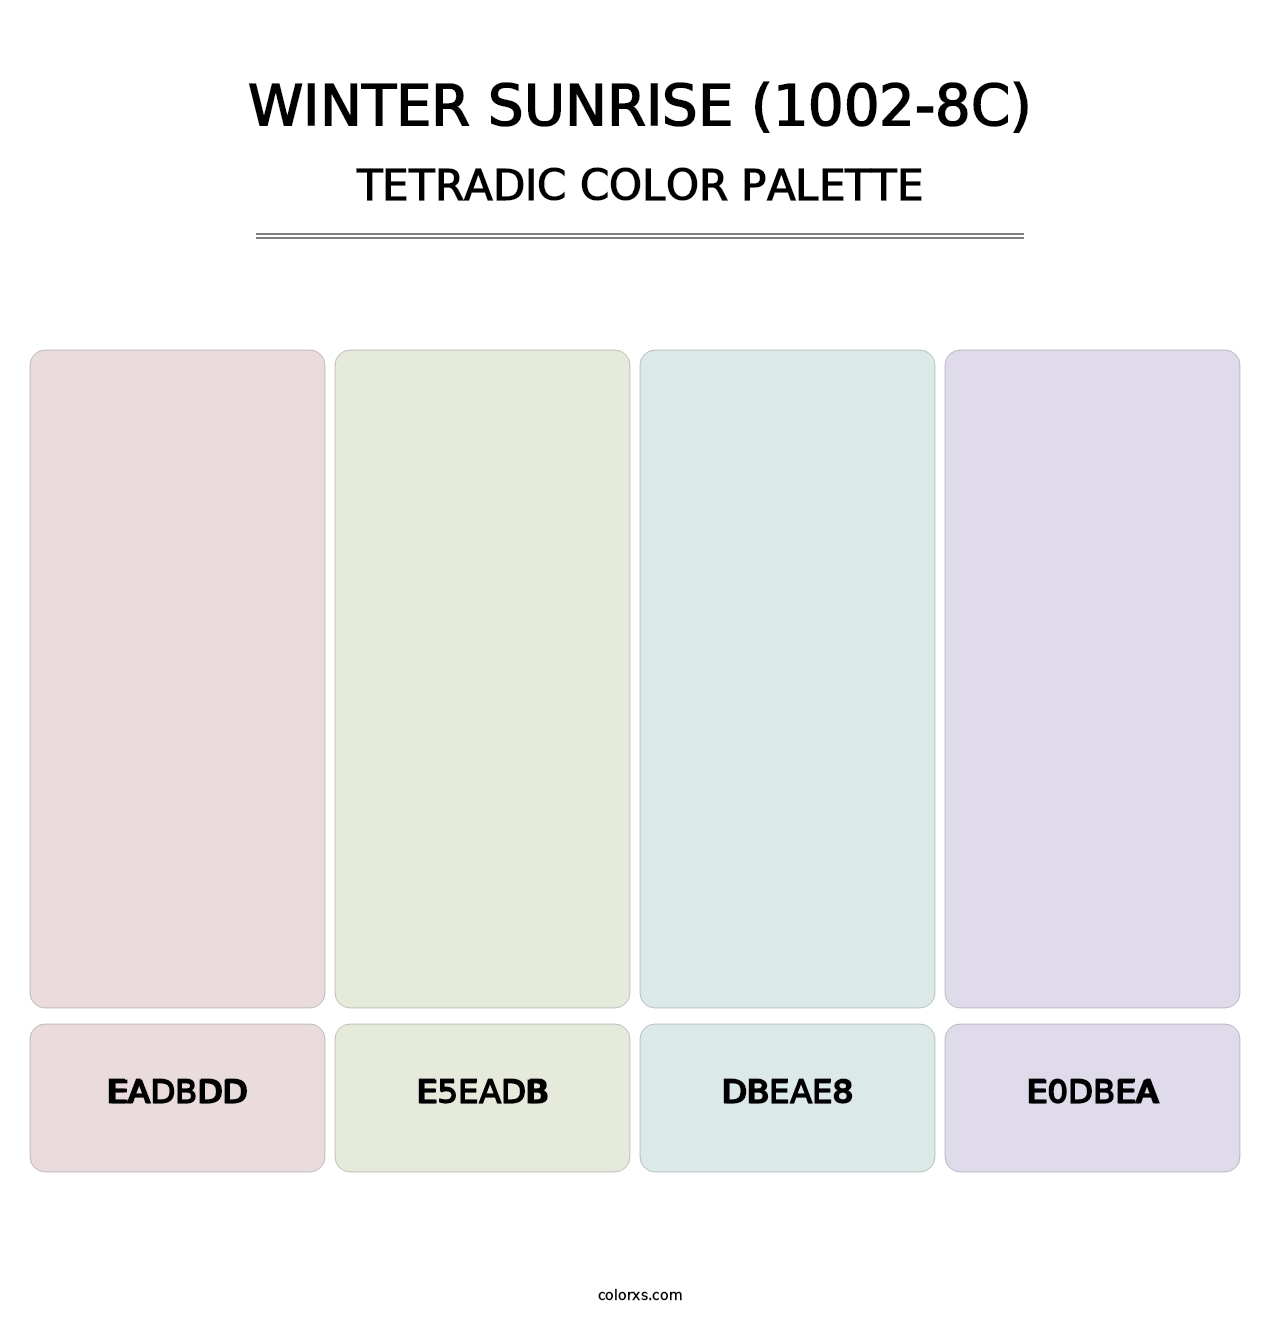 Winter Sunrise (1002-8C) - Tetradic Color Palette